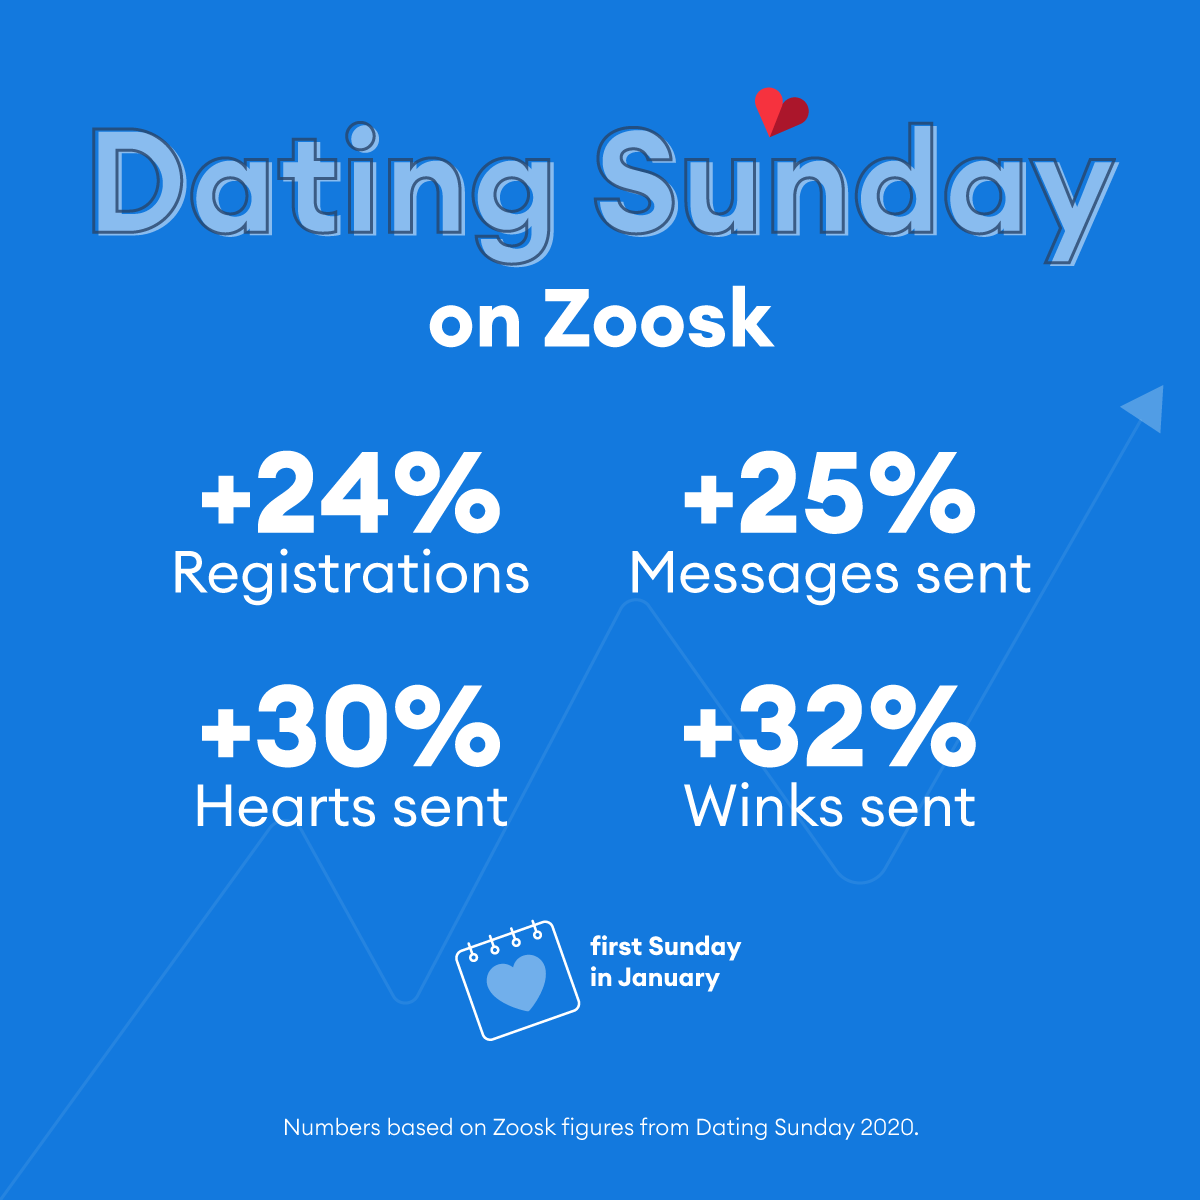 Zoosk Dating Sunday infographic 2021